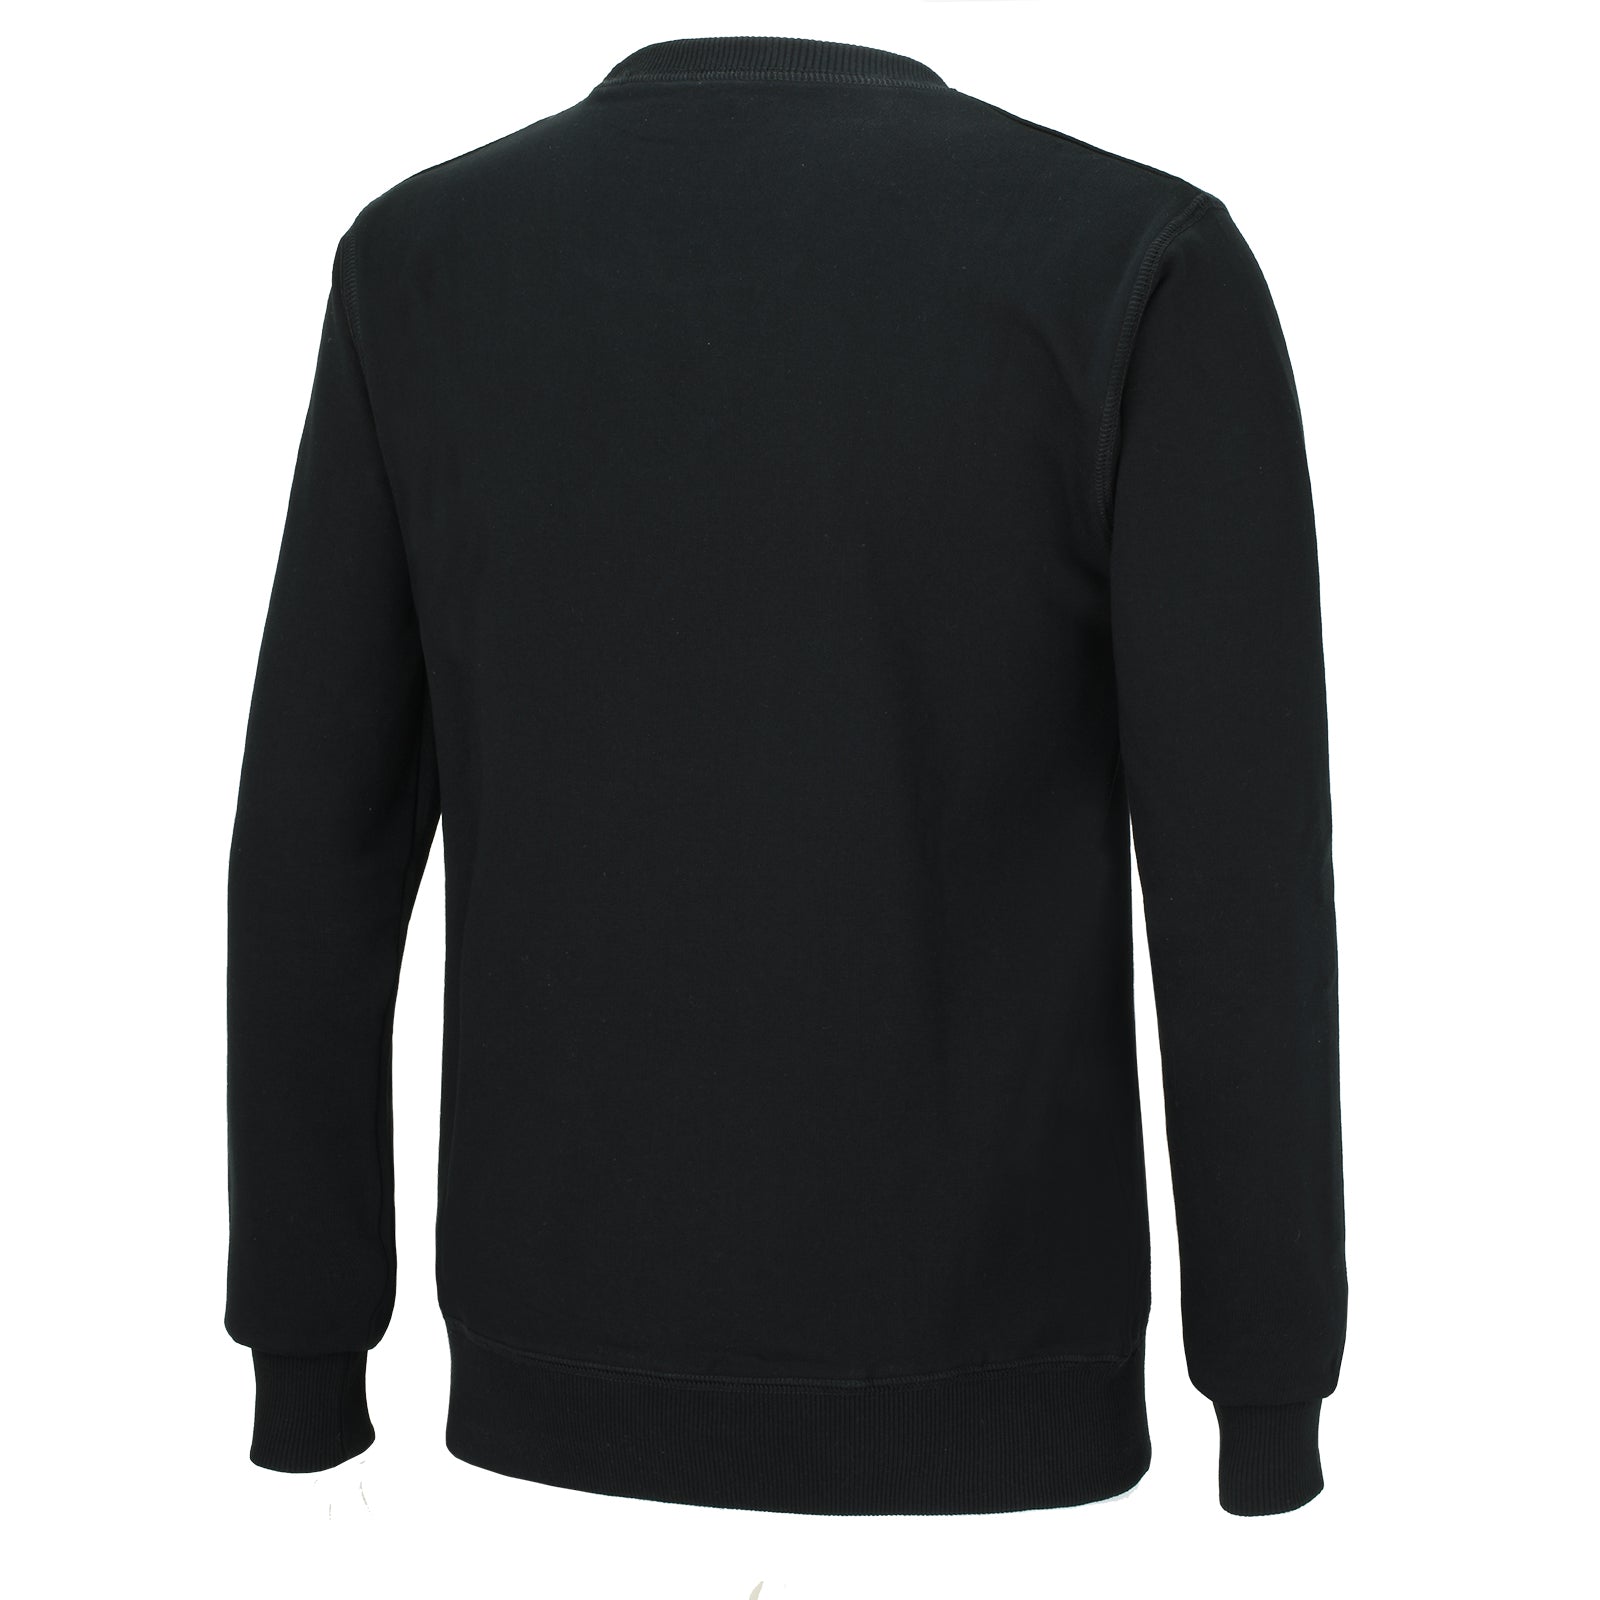 Sweatshirt-ohne-kapuze-winter-thermo-pro-hoodie-sweater-s-m-l-xl-xxl-schwarz-logo-print-back